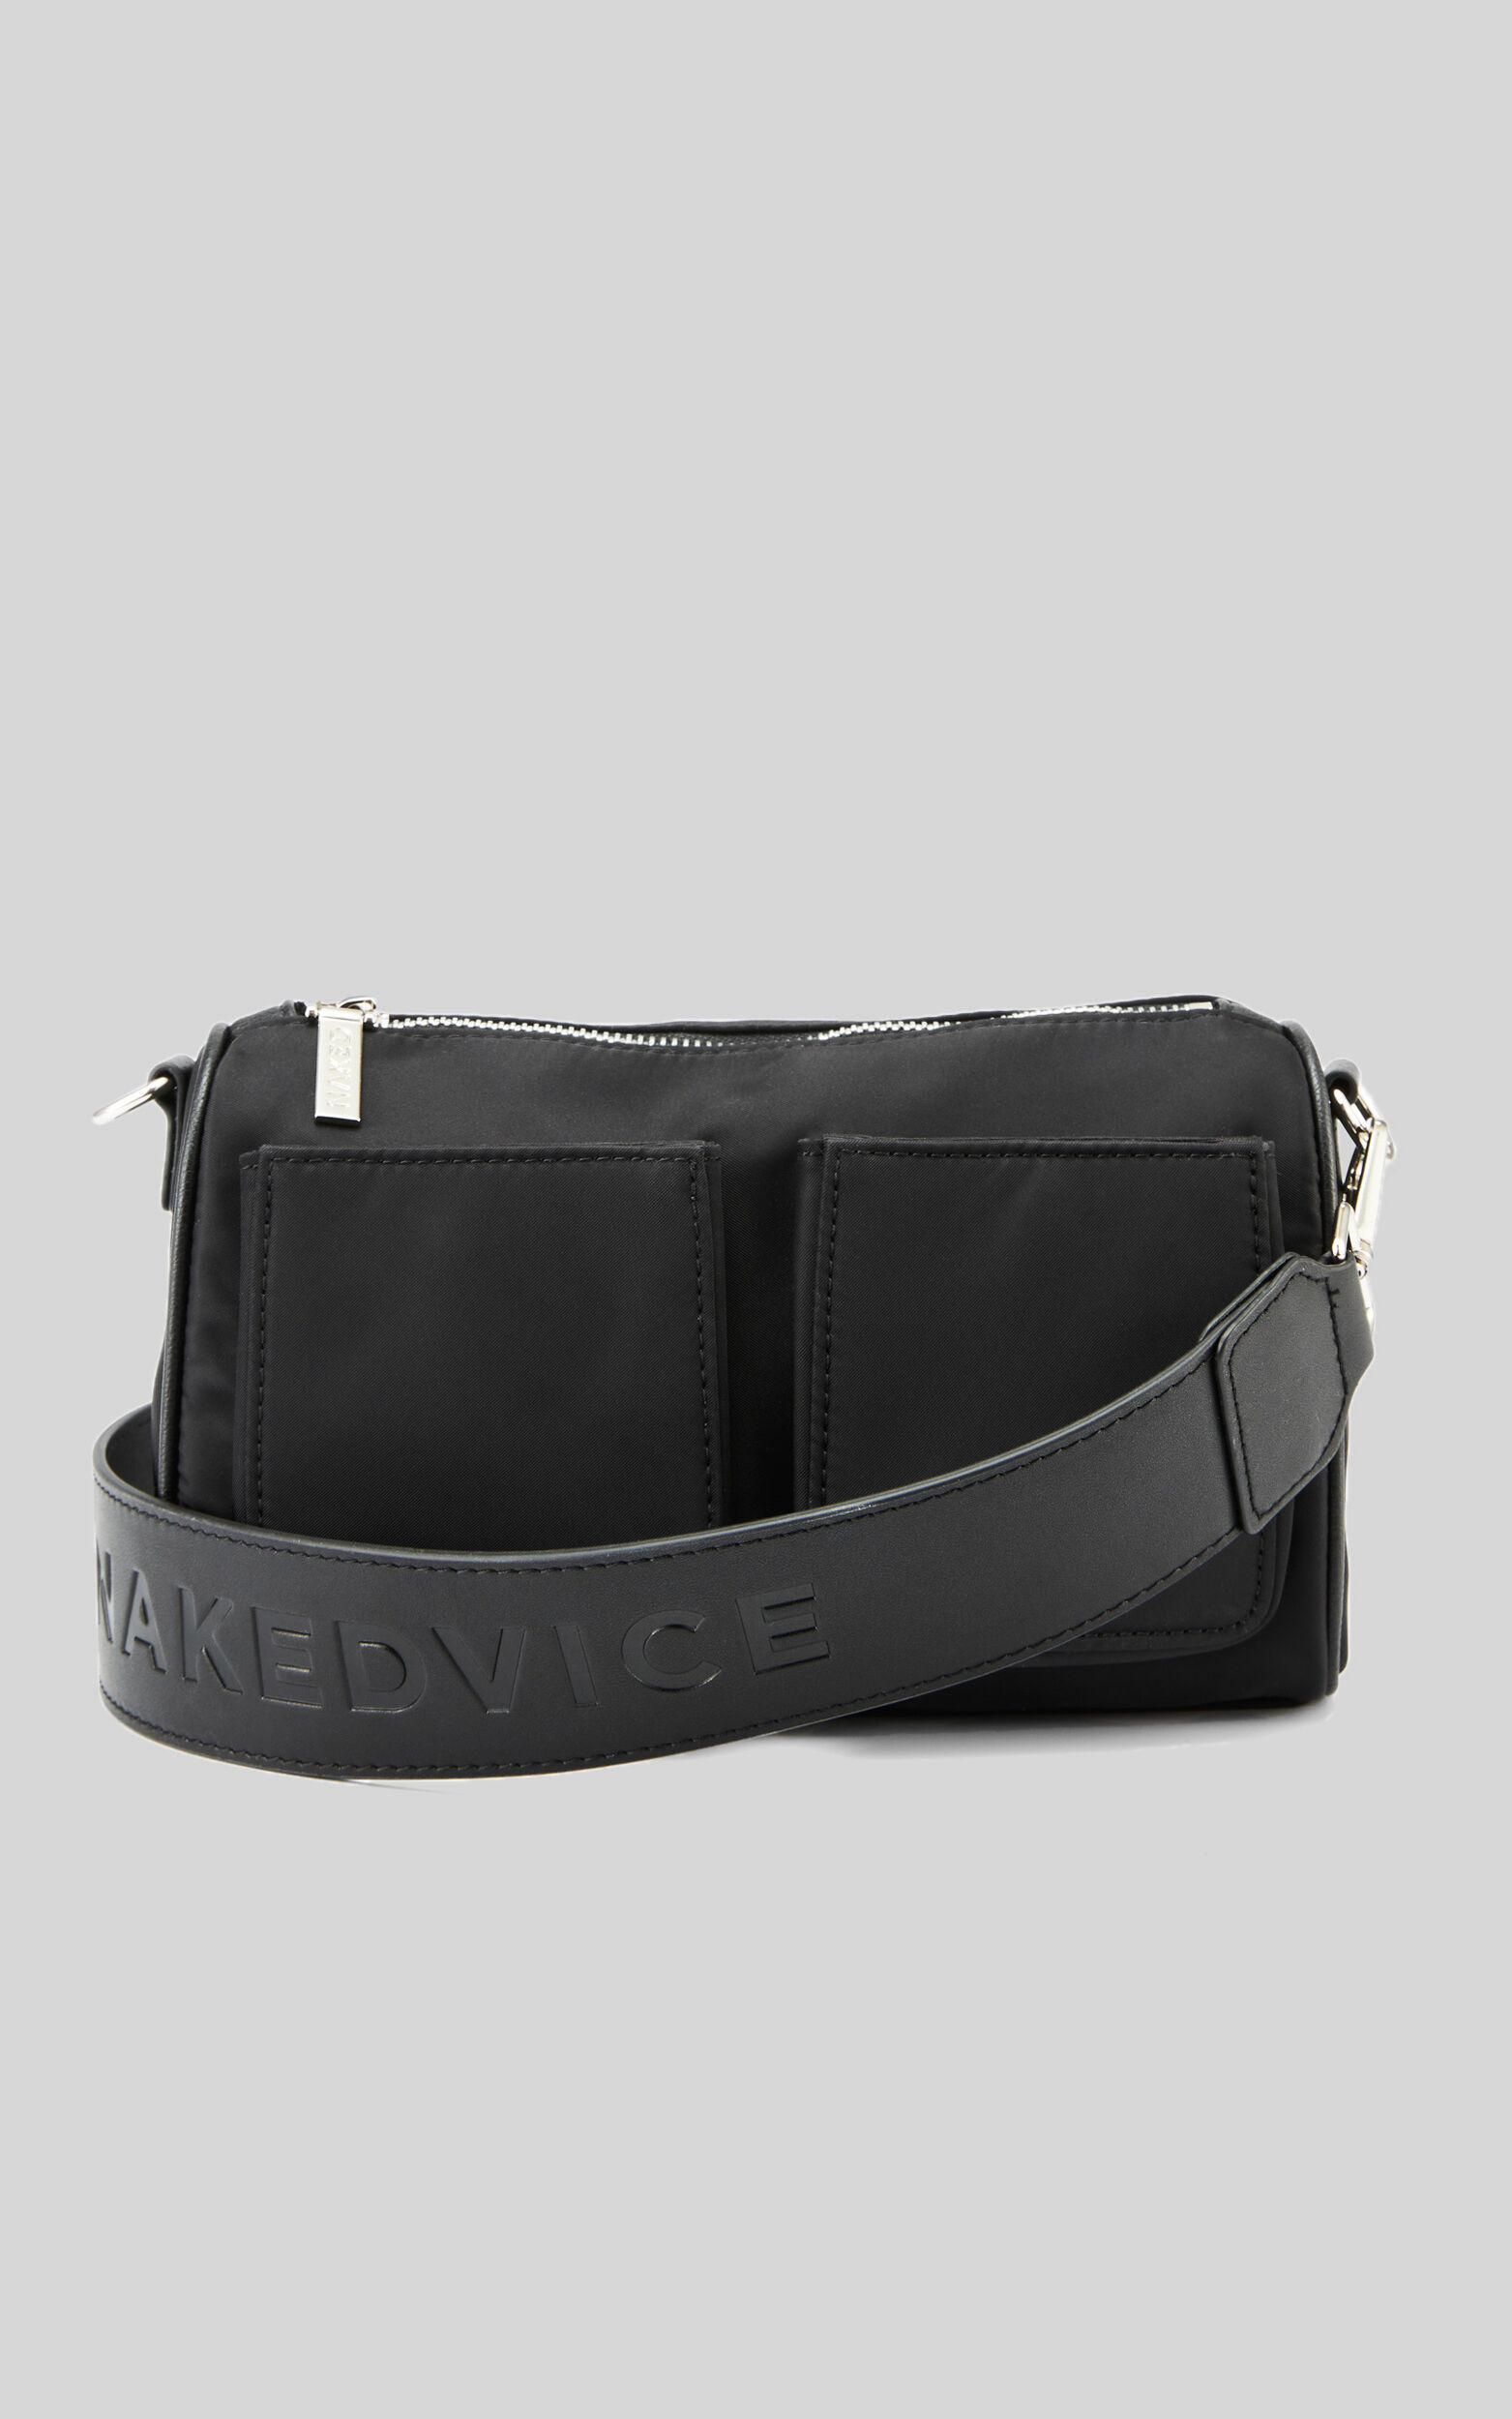 NAKEDVICE - THE AMELIE BAG in Black/Silver - NoSize, BLK1